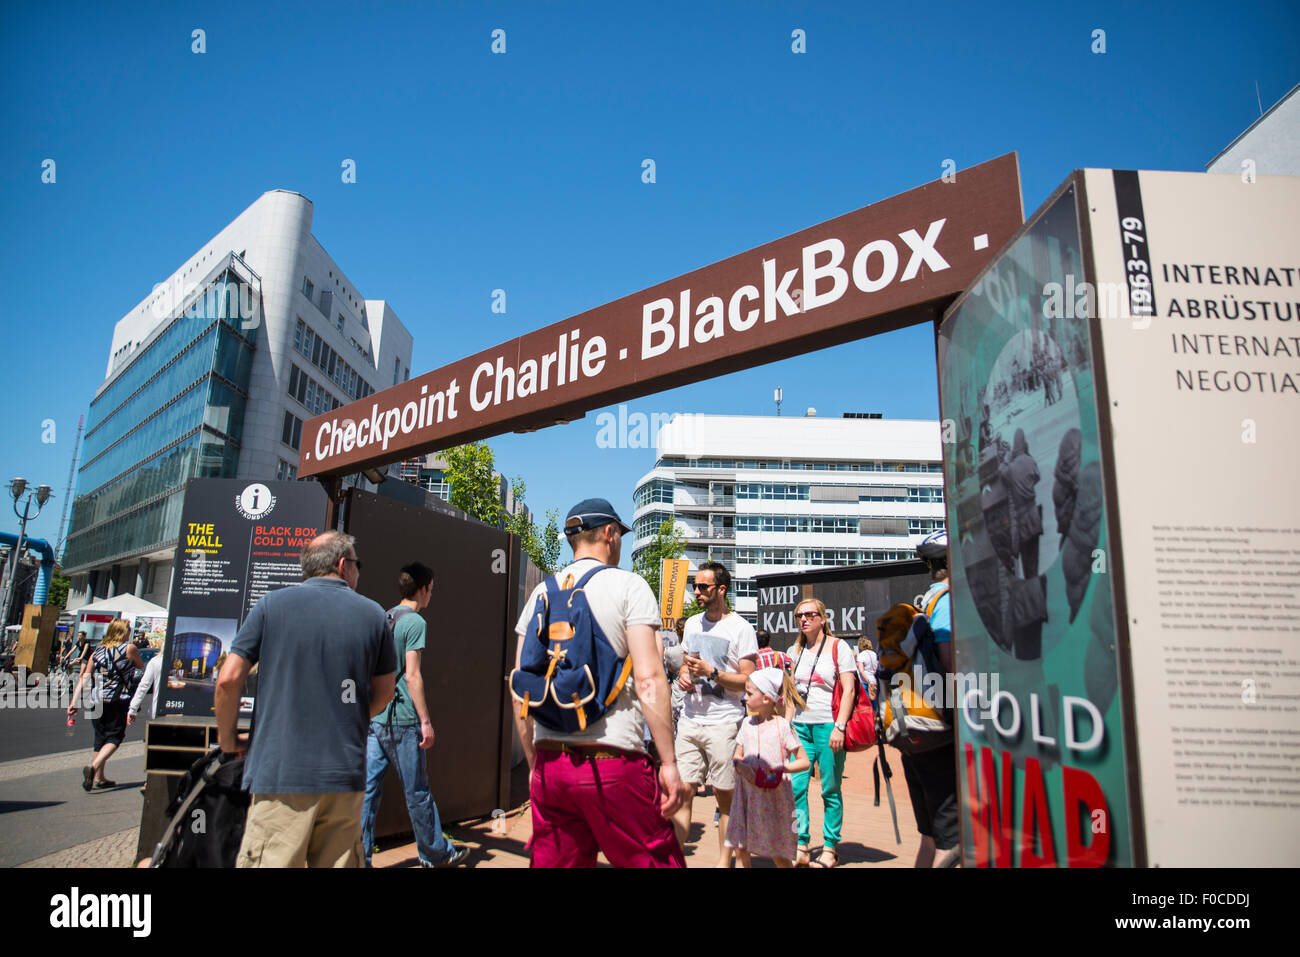 Tourists at Checkpoint Charlie Black Box, Berlin Stock Photo - Alamy